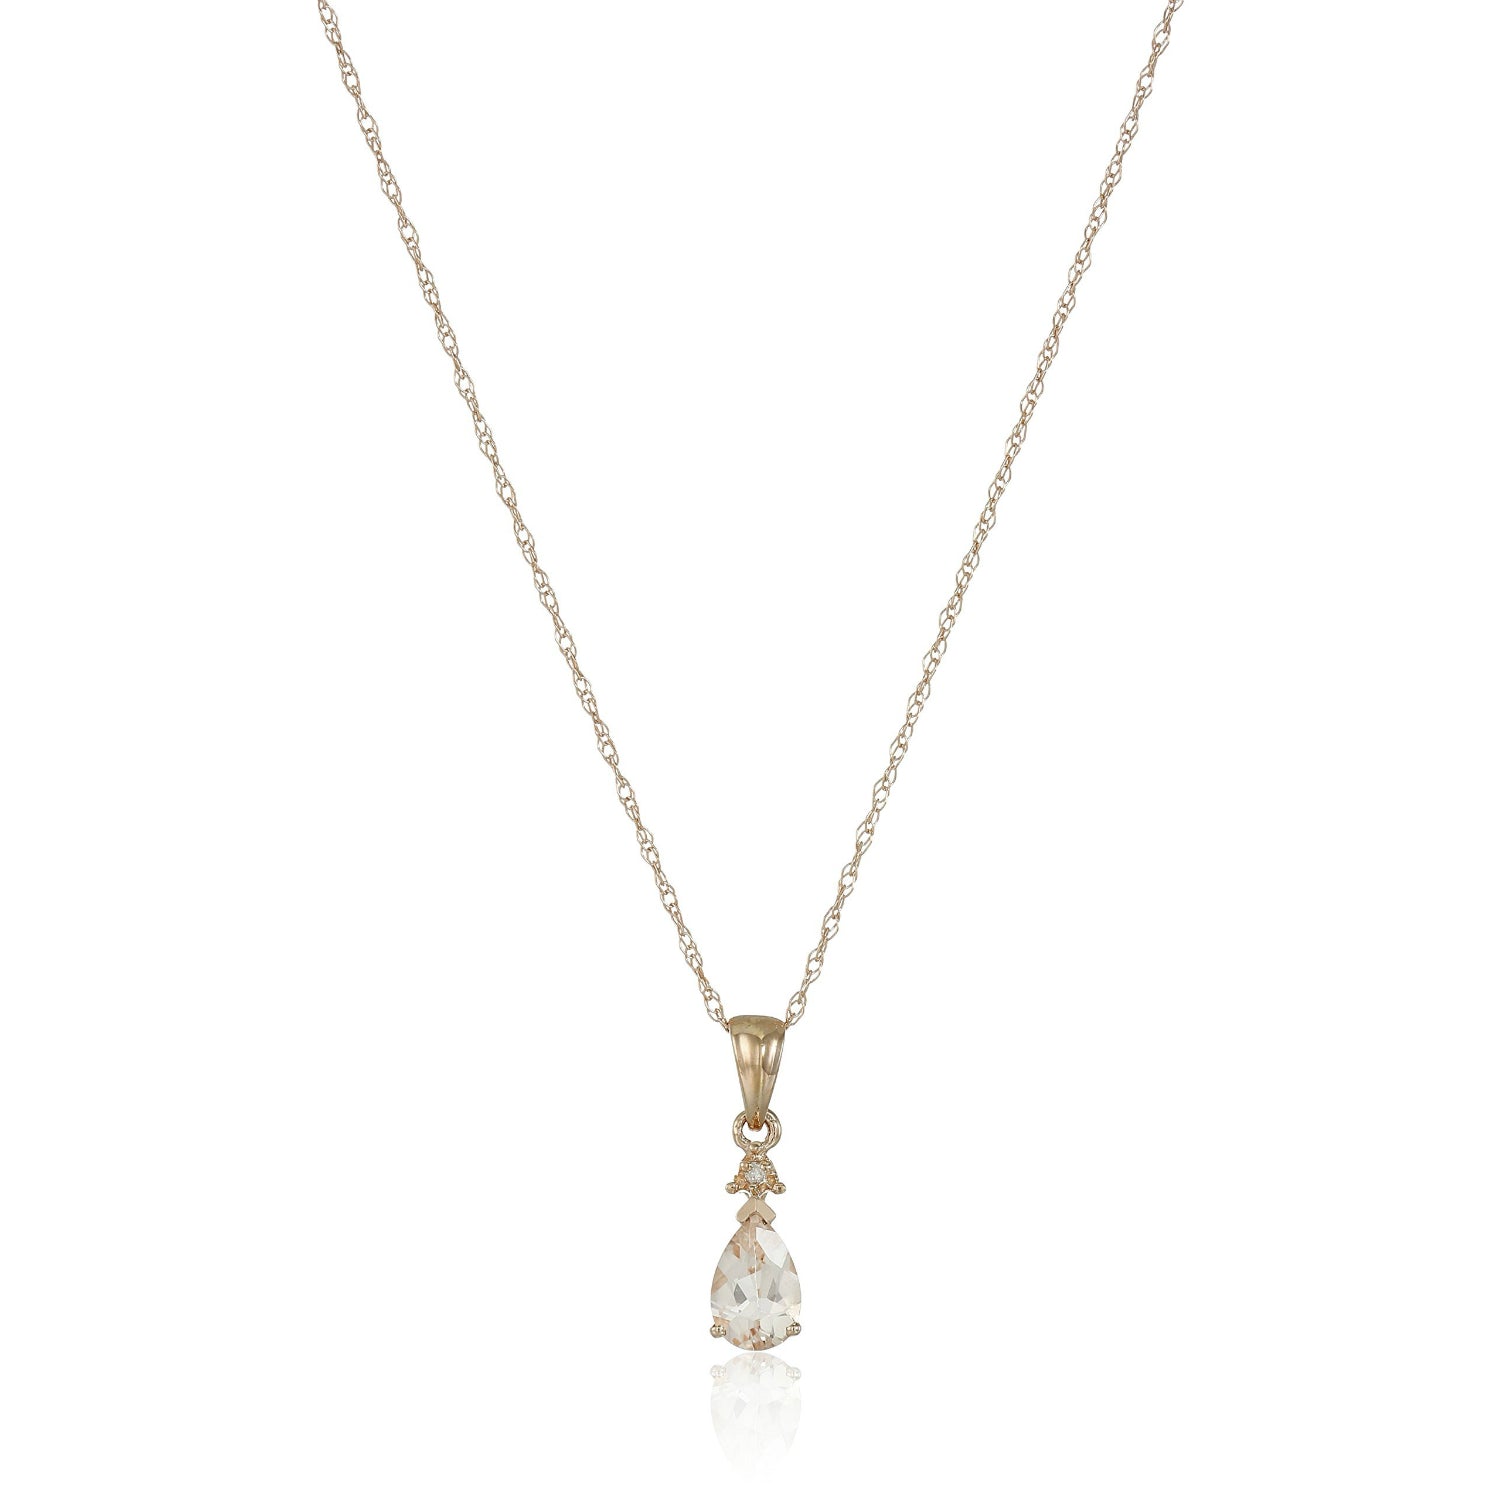 10k Rose Gold Morganite & Diamond Pendant Necklace, 18" - Pinctore